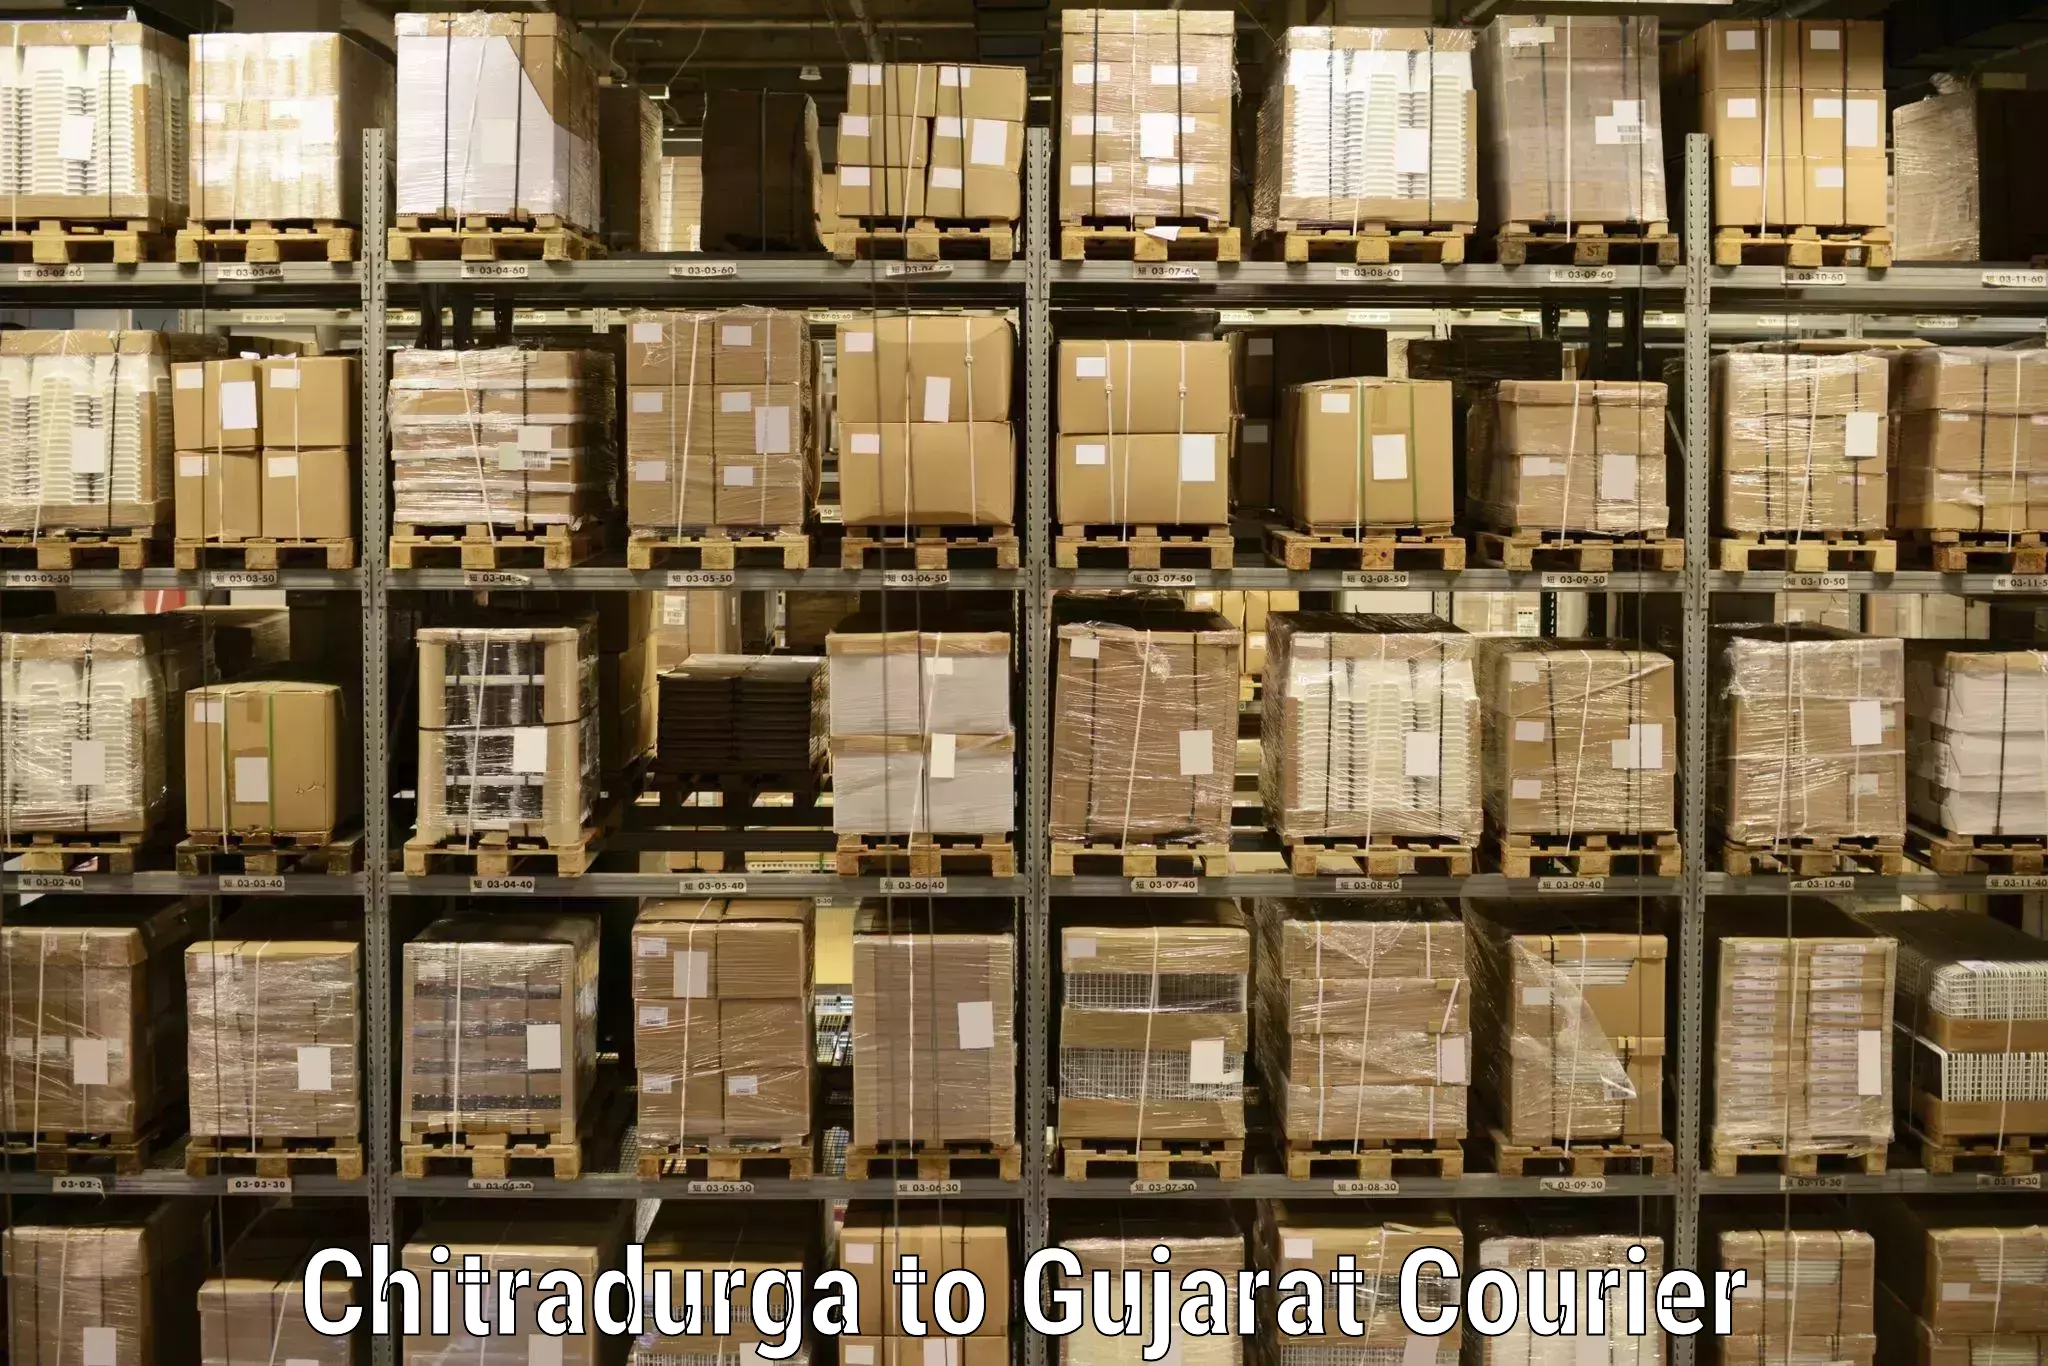 User-friendly courier app Chitradurga to Bhanvad